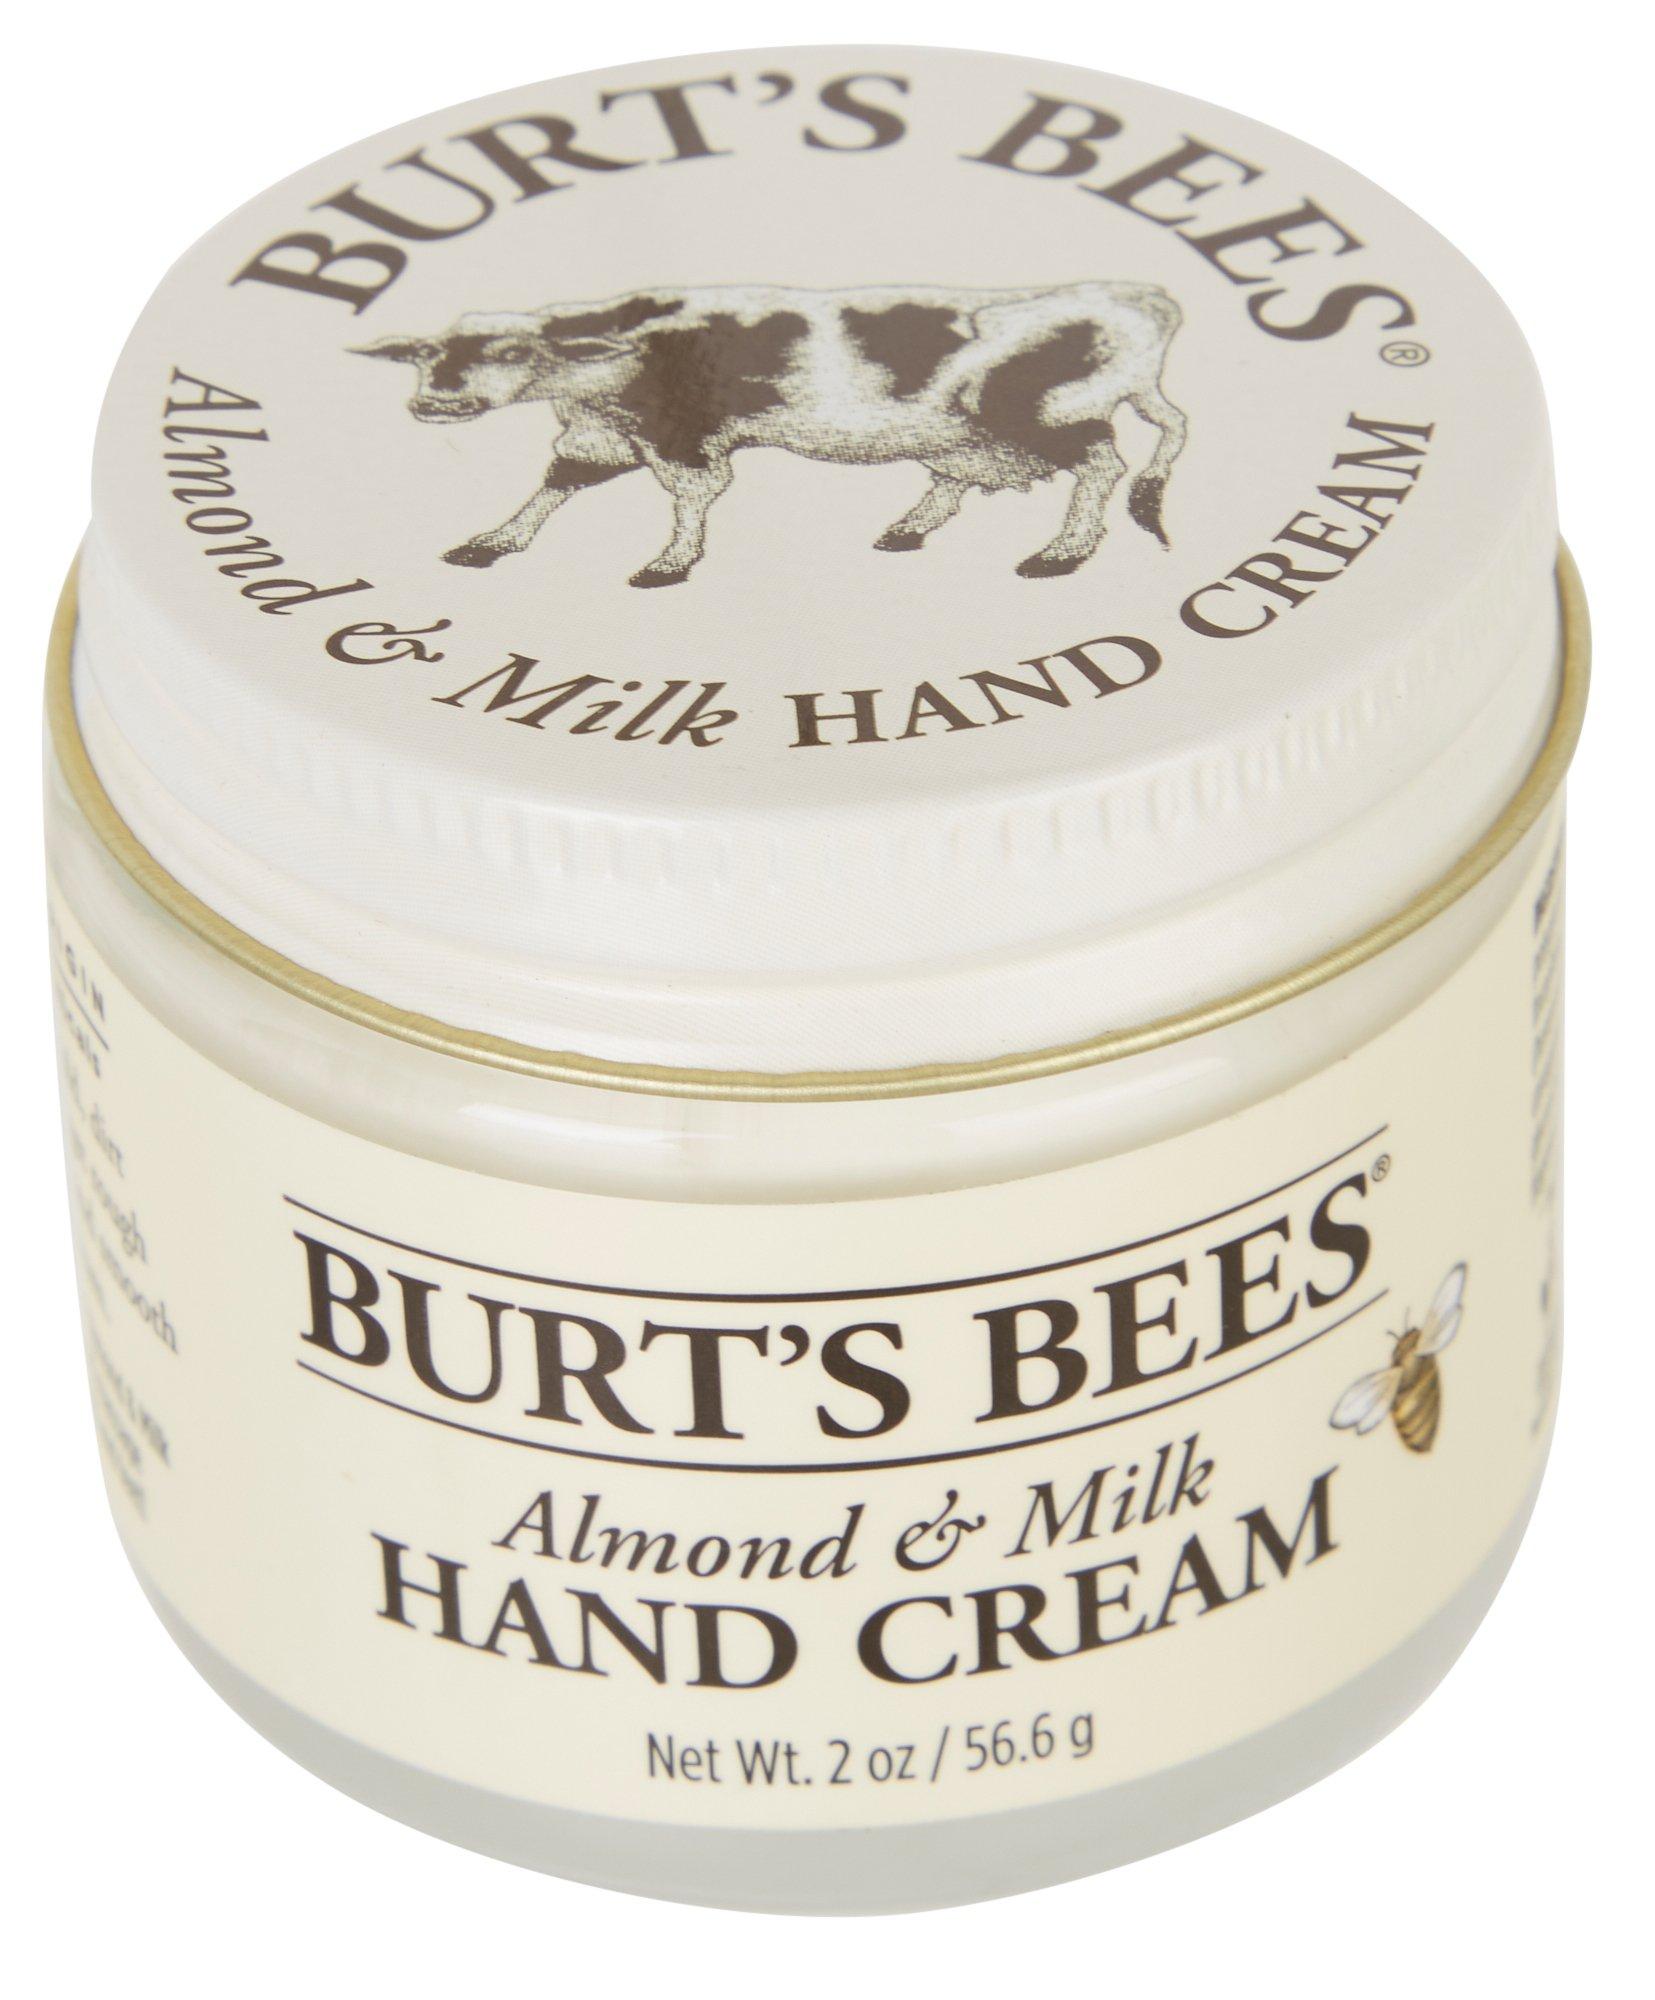 Almond & Milk Hand Cream For Dry Skin 2 oz.